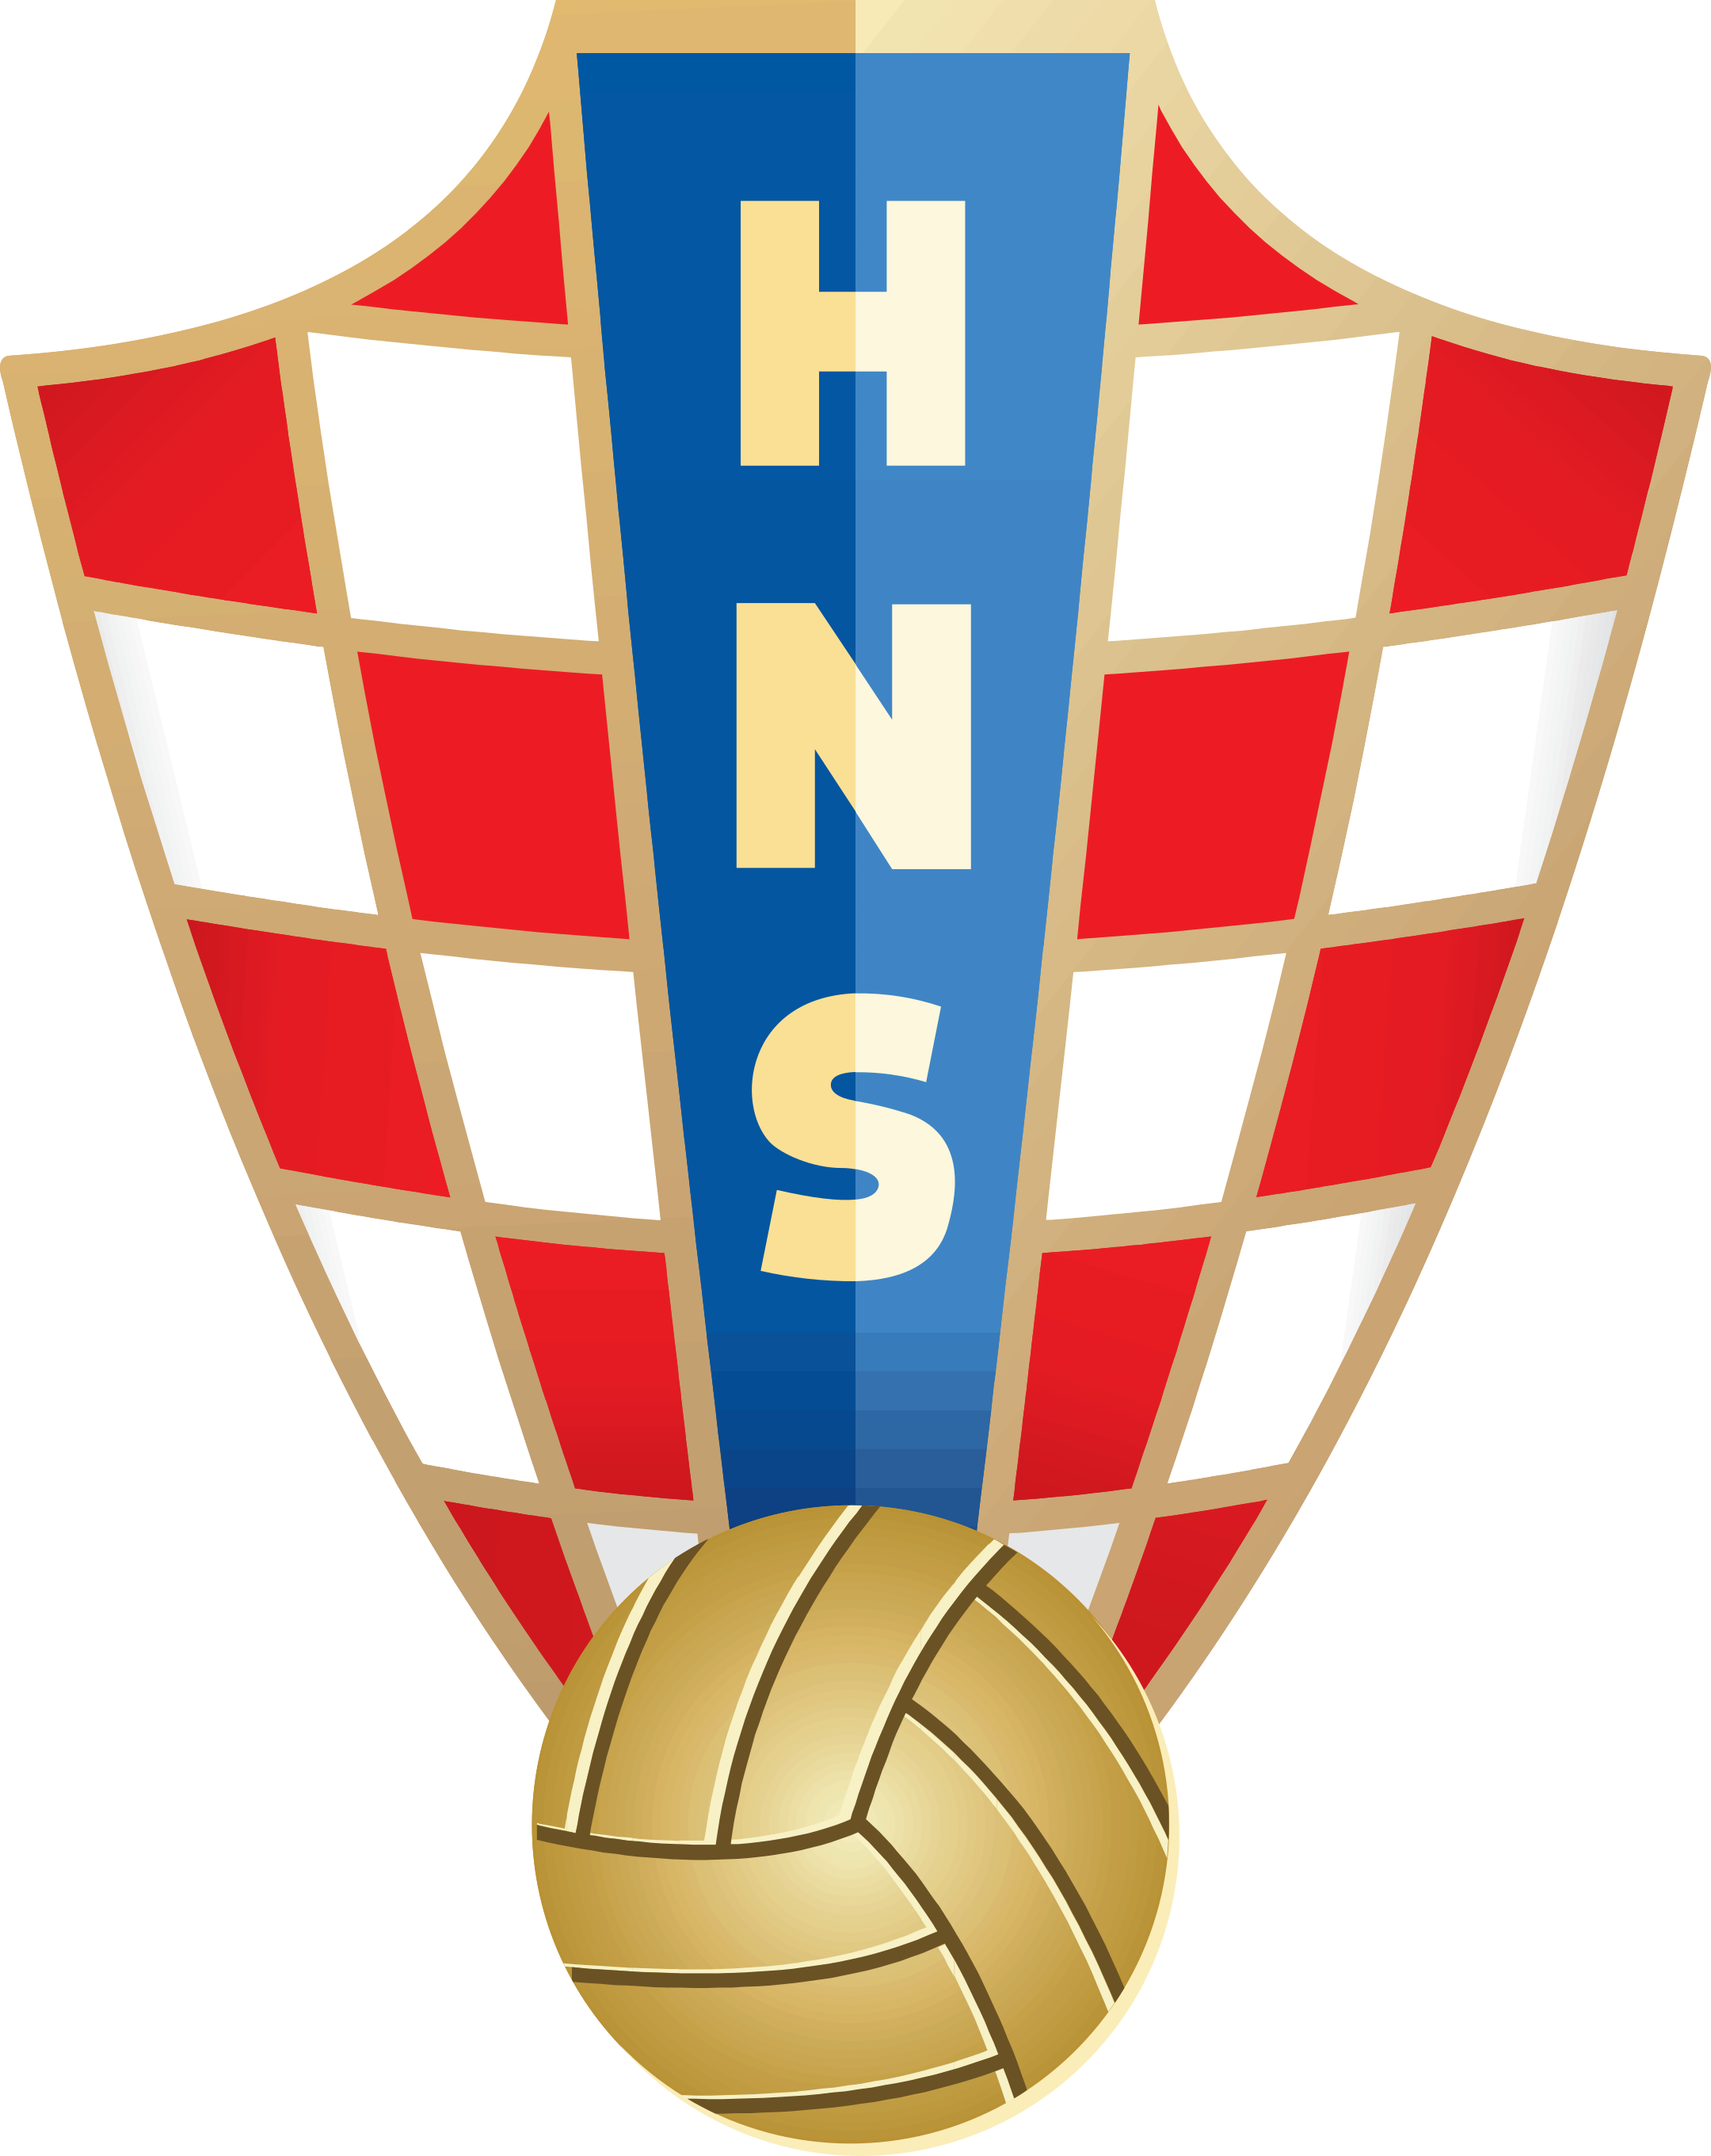 croatia national football team logo 1 - Croatia National Football Team Logo